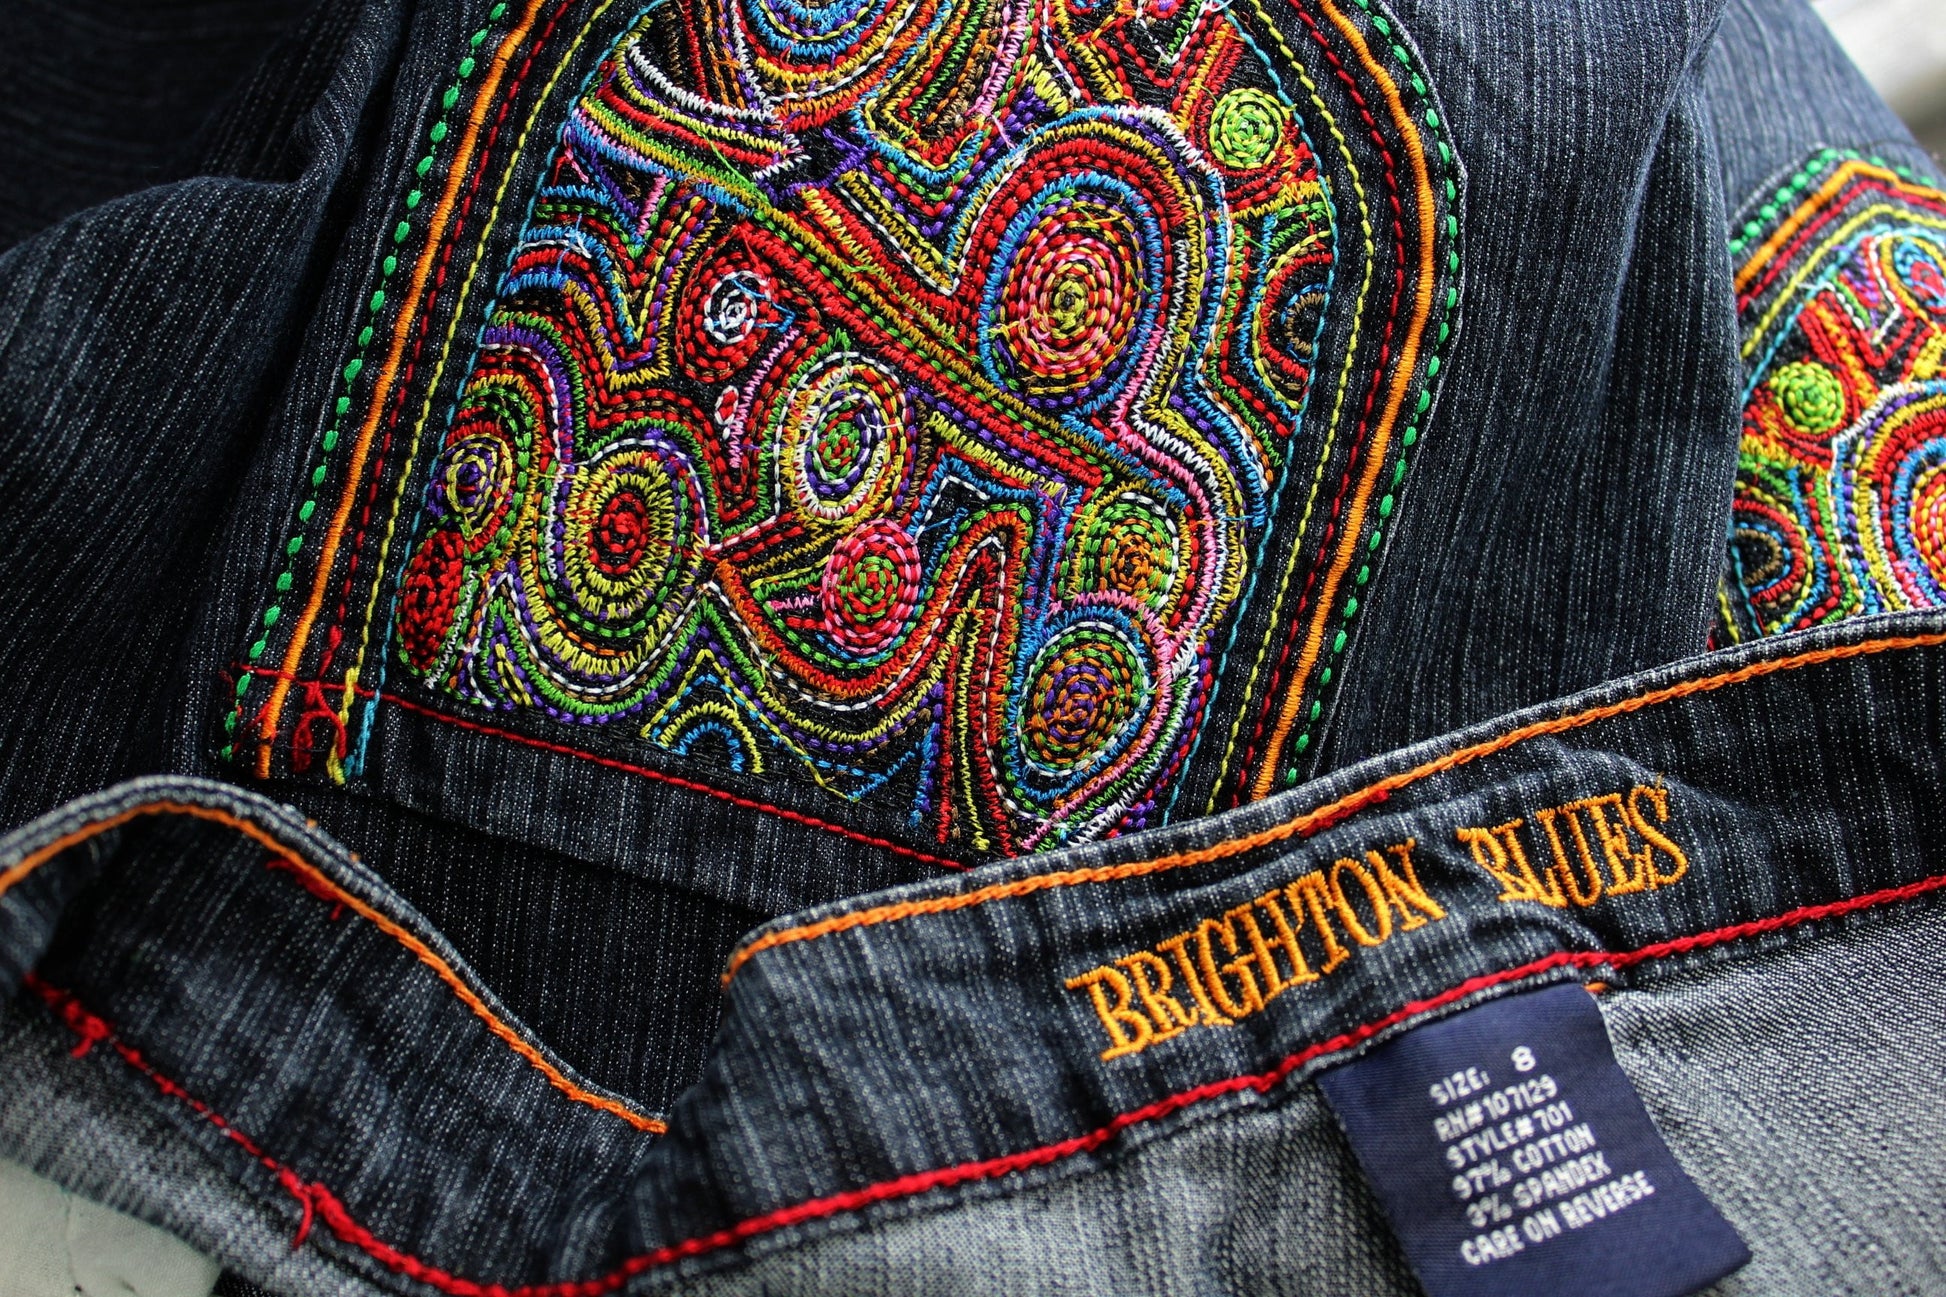 Brighton Blues Embroidered Jeans - Capri Length Size 8 ez care cotton spandex